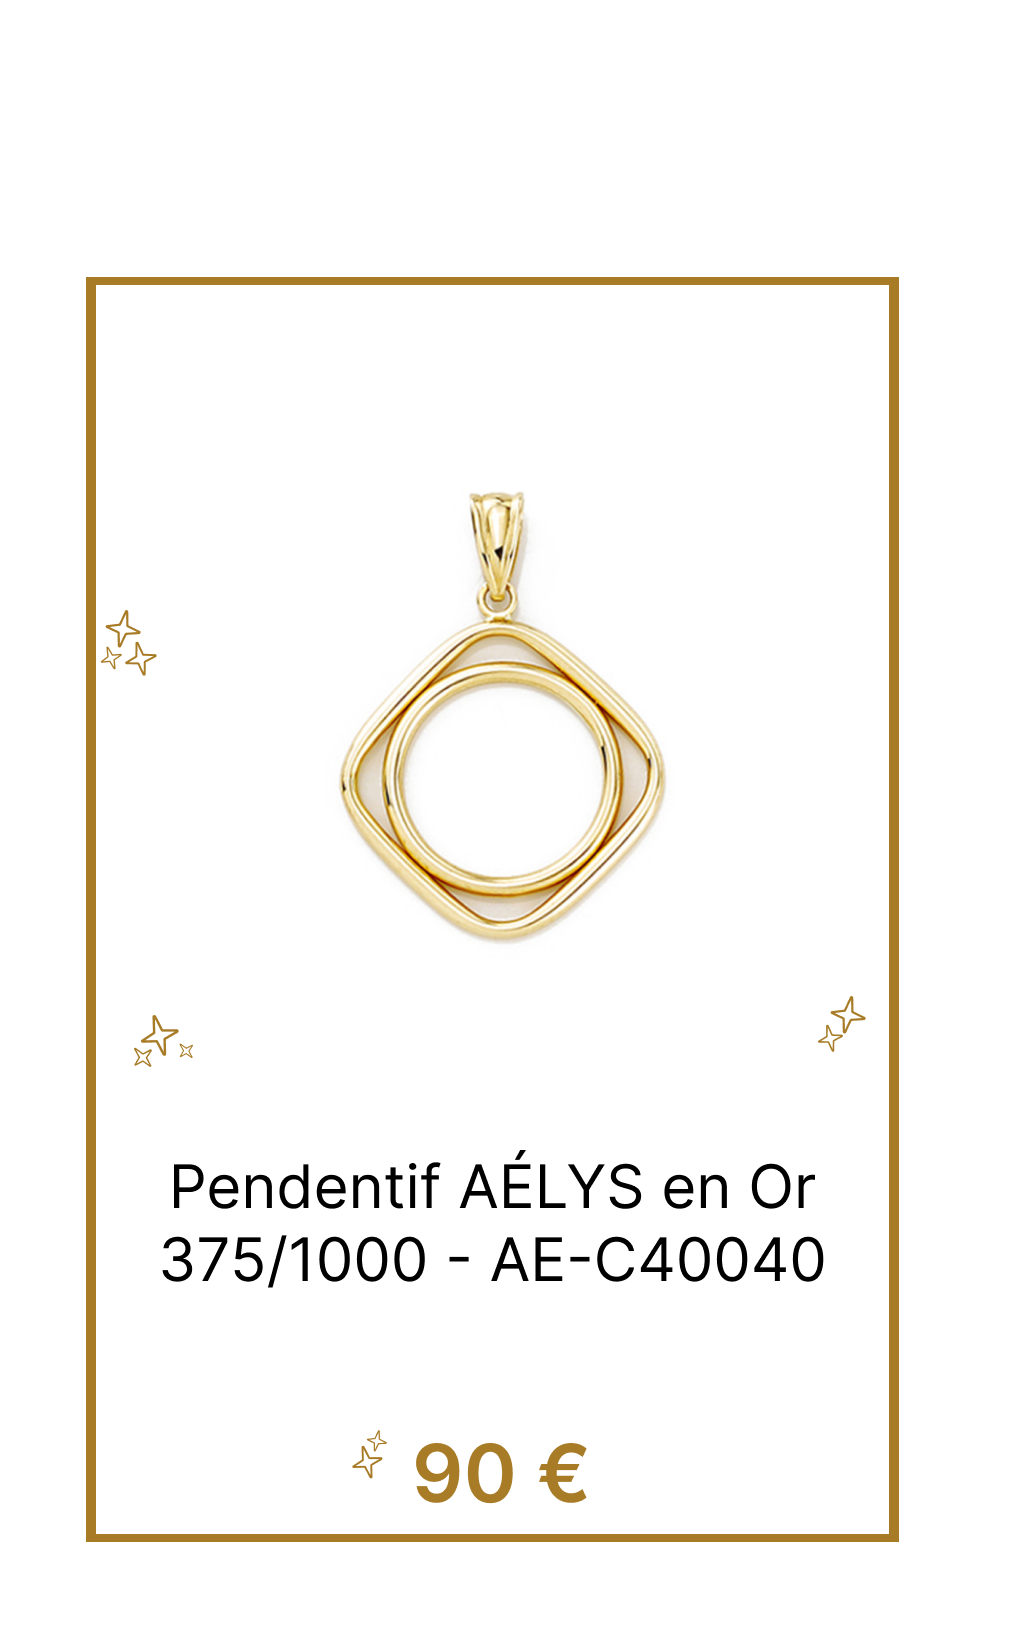 Pendentif-AÉLYS-Or-AE-C40040